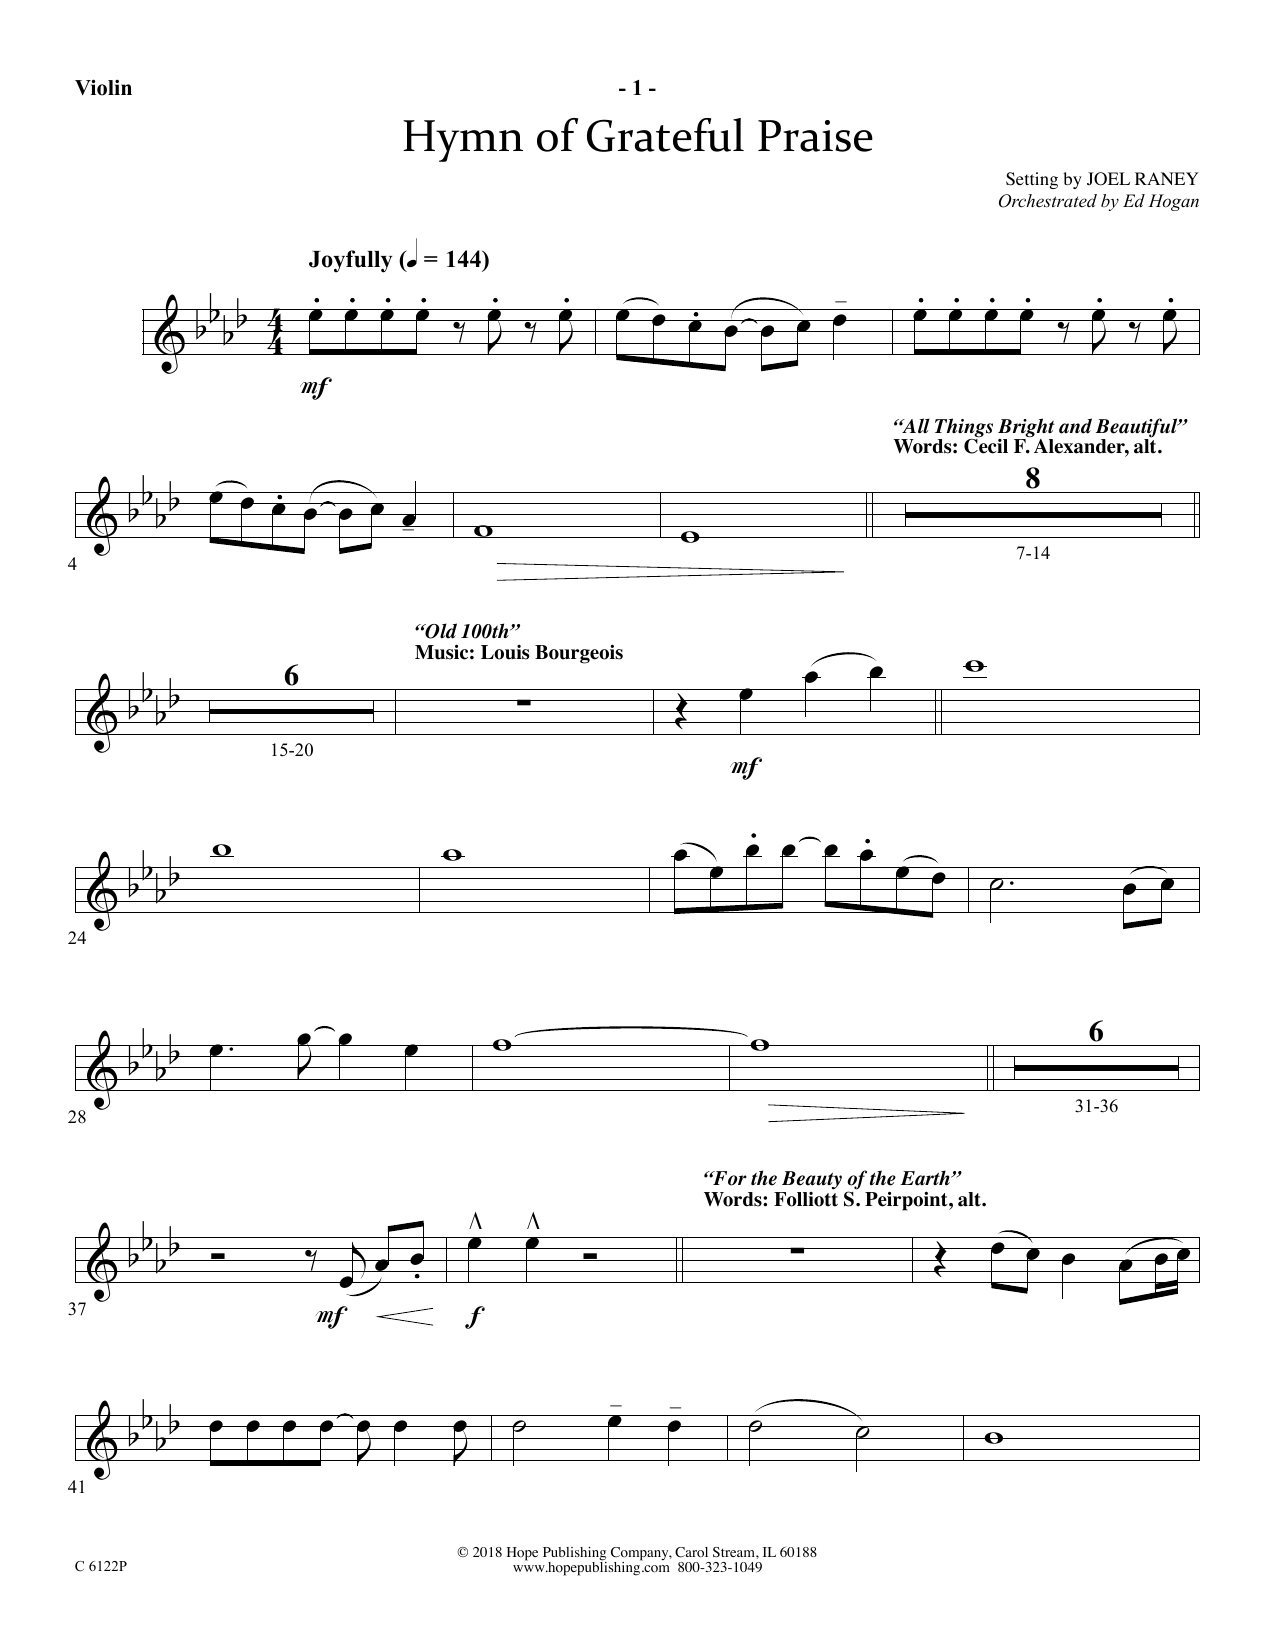 Joel Raney Hymn Of Grateful Praise - Violin Sheet Music Notes & Chords for Choir Instrumental Pak - Download or Print PDF